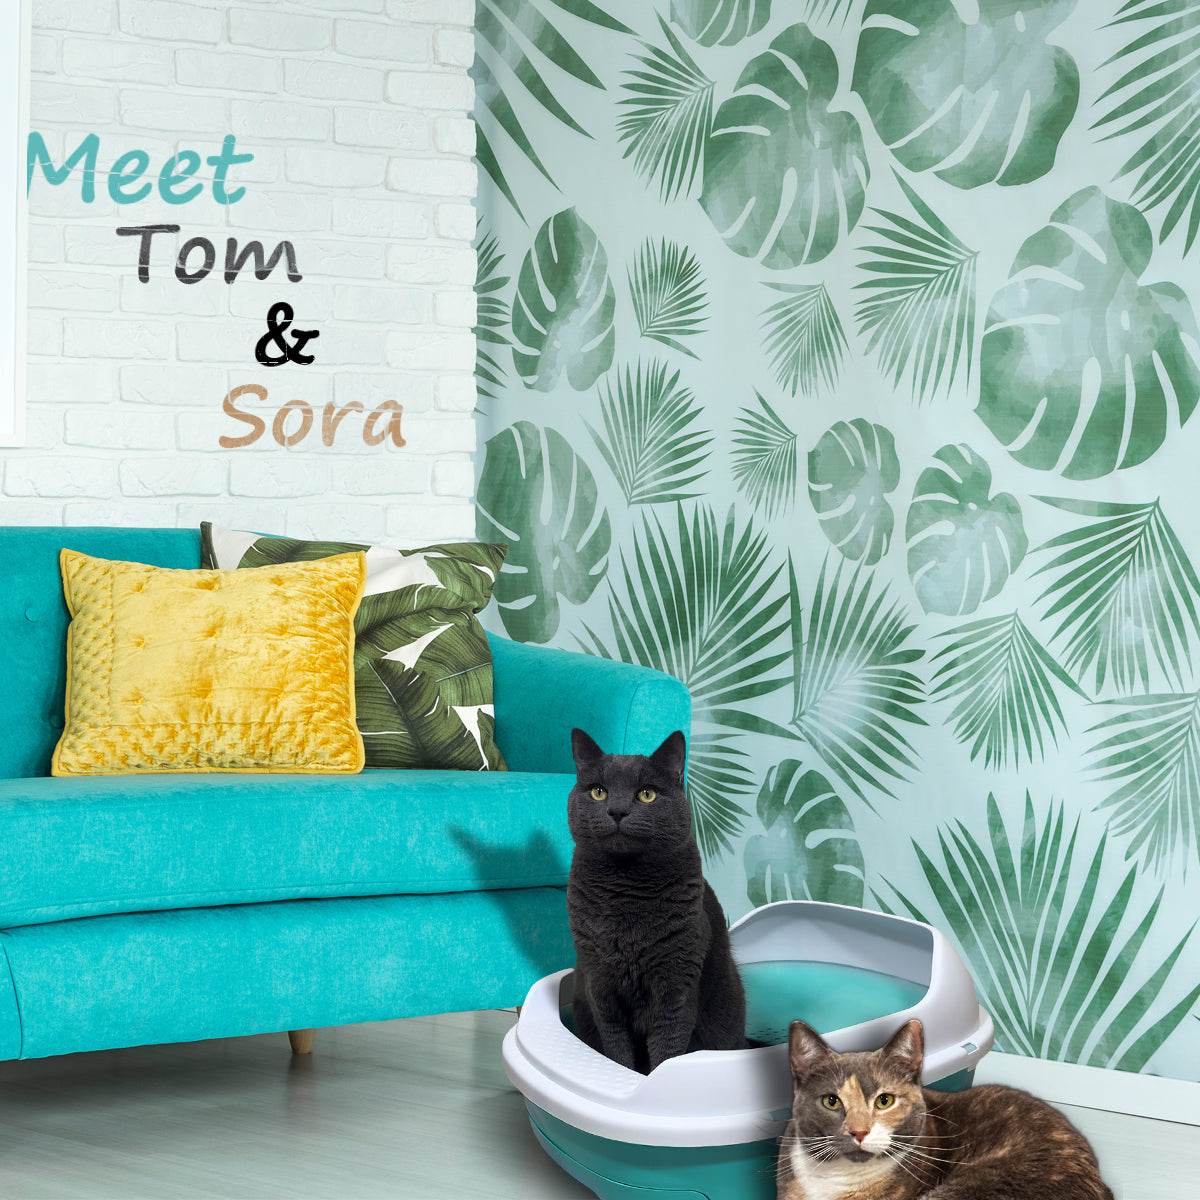 Pine Pellet Litter Box - Meet Tom and Sora - Turquoise